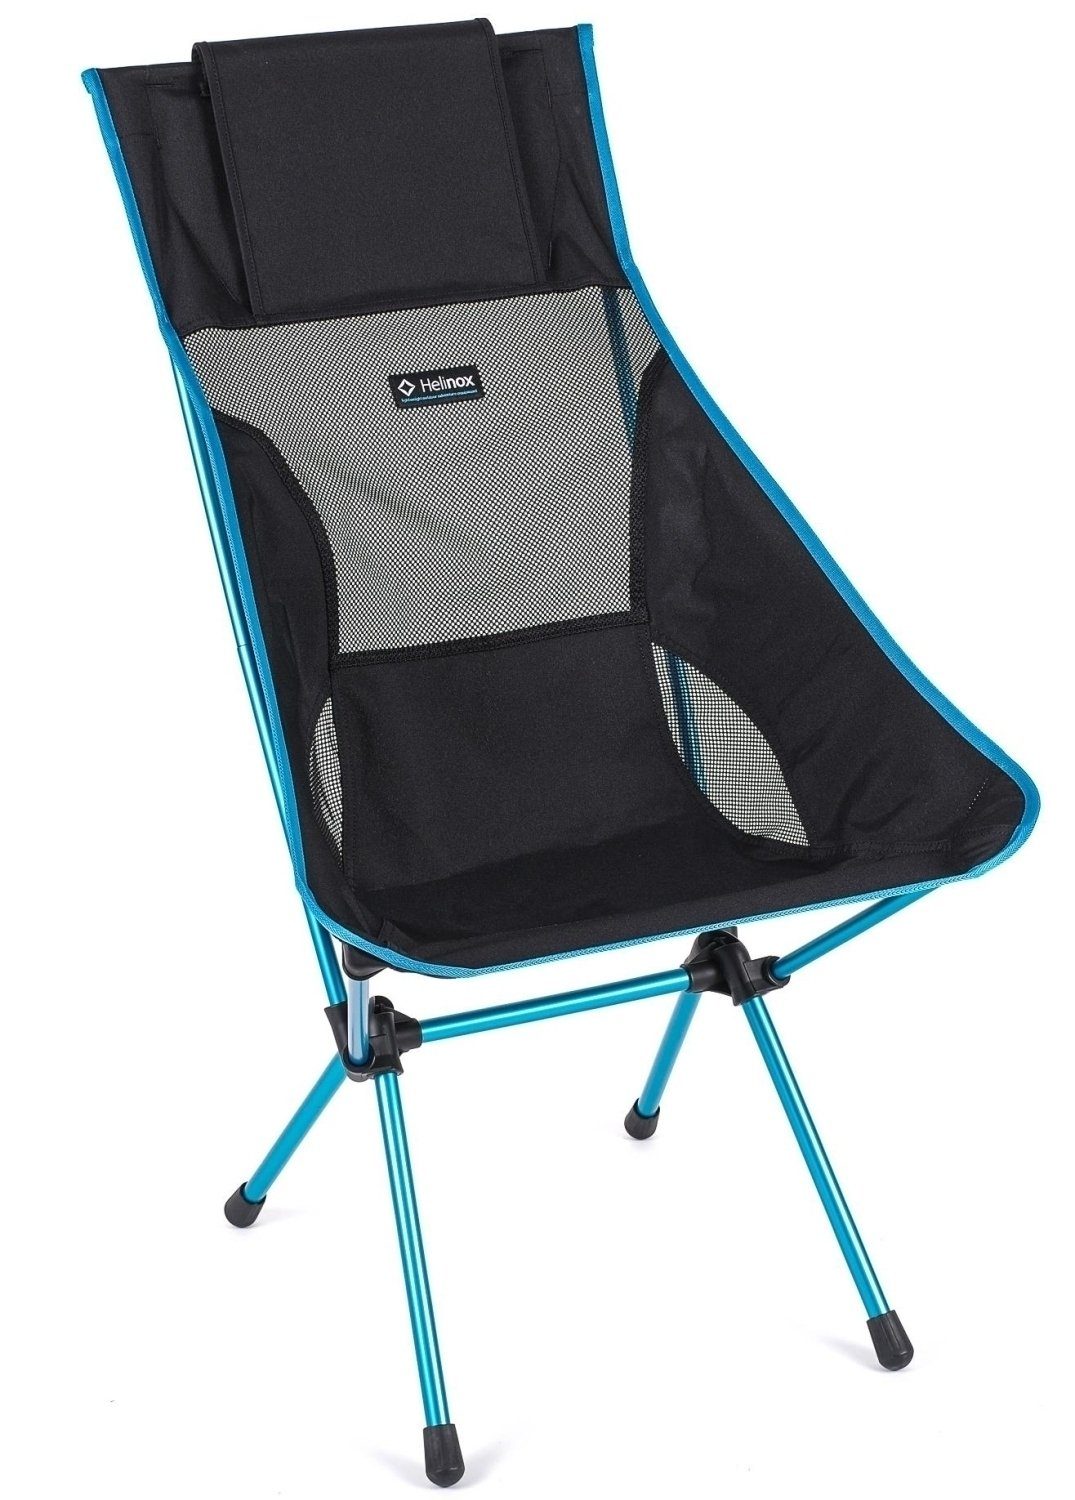 Helinox Campingstuhl Helinox Sunset Chair Pockets Black 145kg) max. (Gewicht 1,6kg / Traglast 